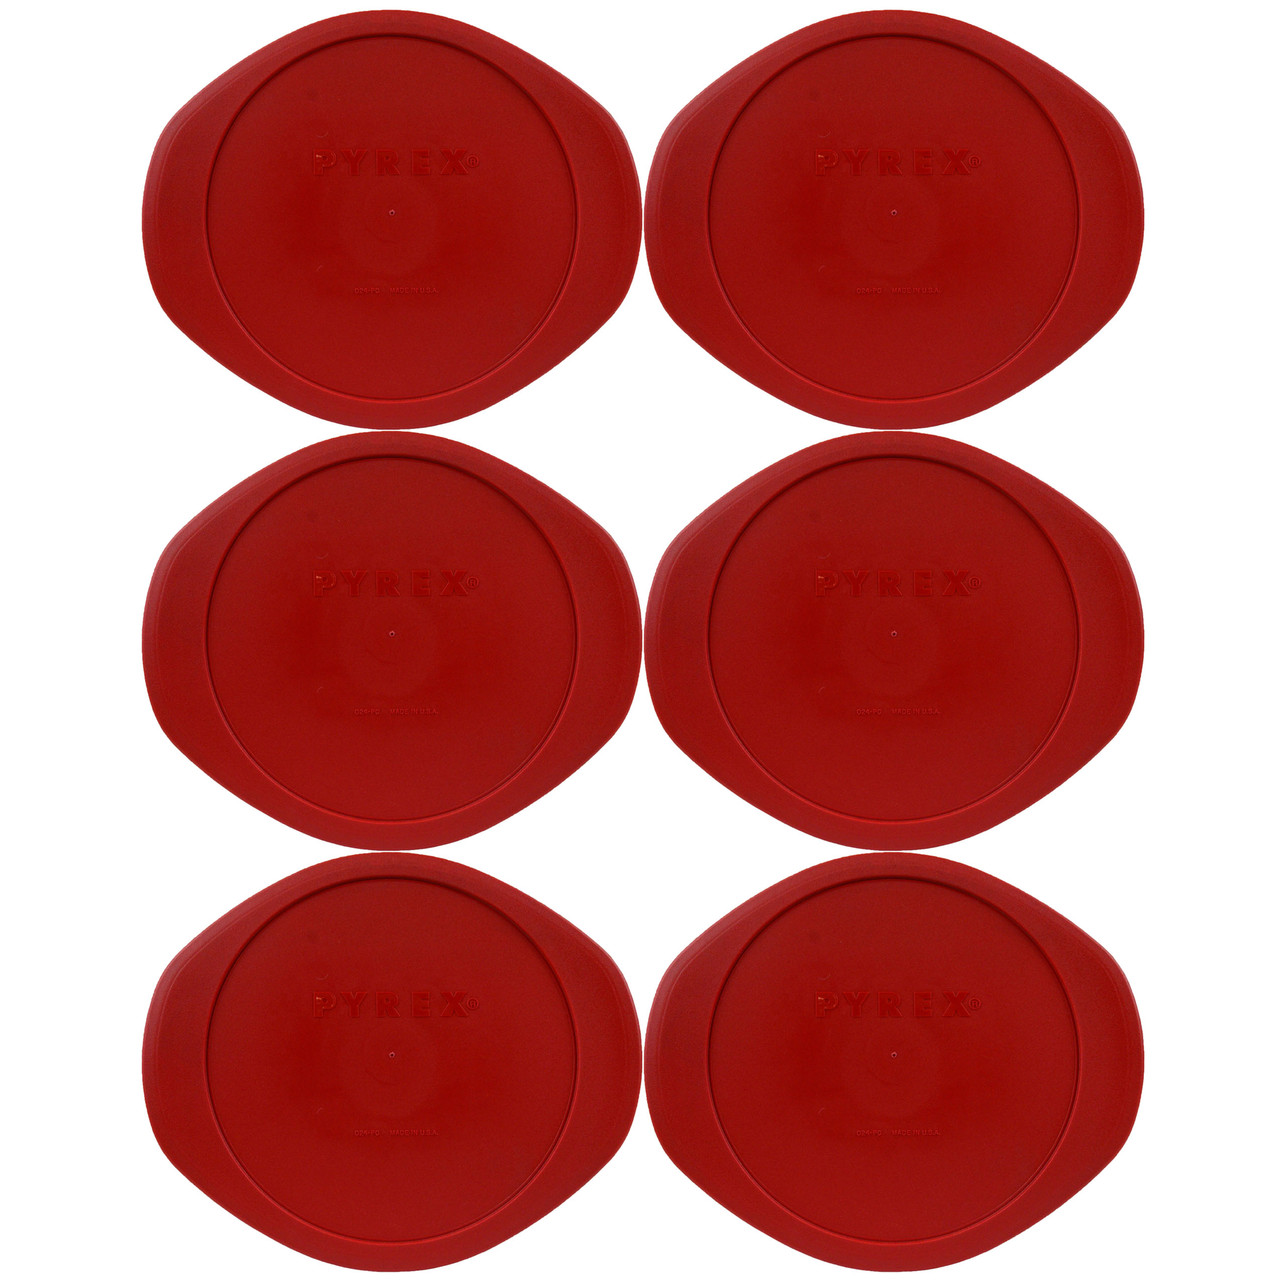 Pyrex 7211r 4-Lock/Freshlock Poppy Red Plastic Storage Replacement Lid (2-Pack)